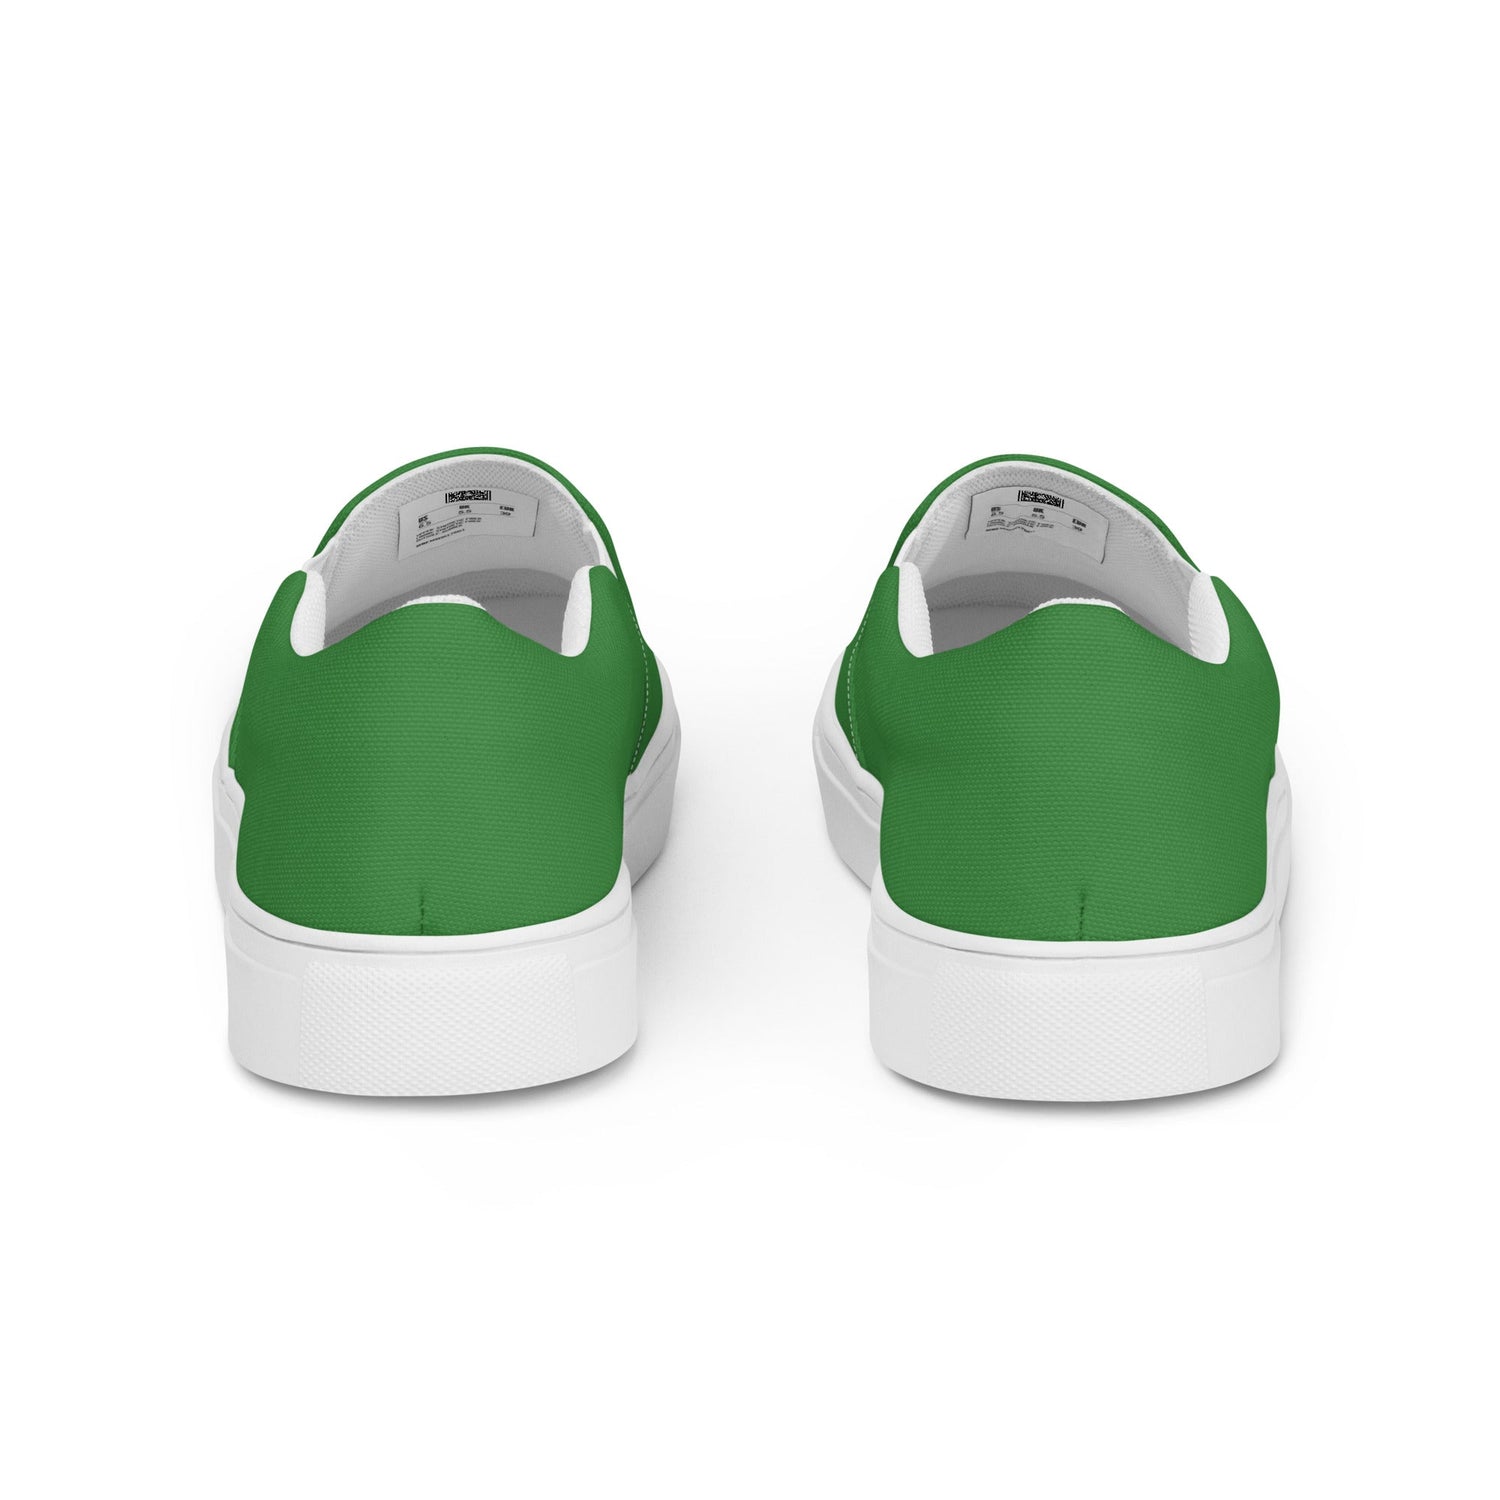 klasneakers Men’s slip-on canvas shoes - Green